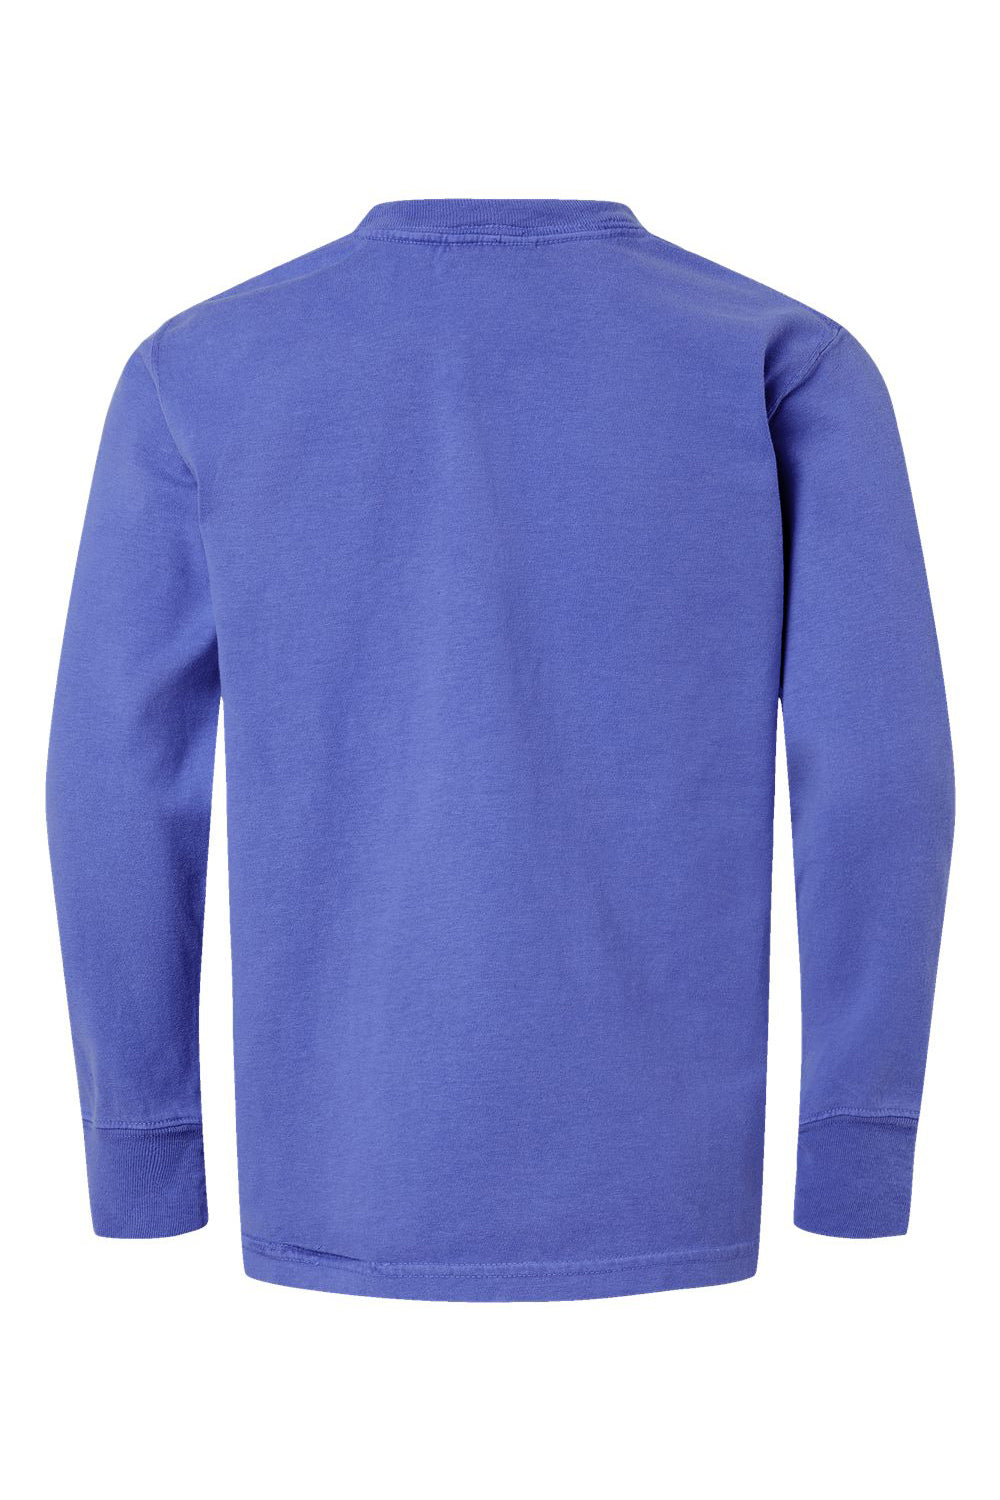 ComfortWash By Hanes GDH275 Youth Garment Dyed Long Sleeve Crewneck T-Shirt Deep Forte Blue Flat Back